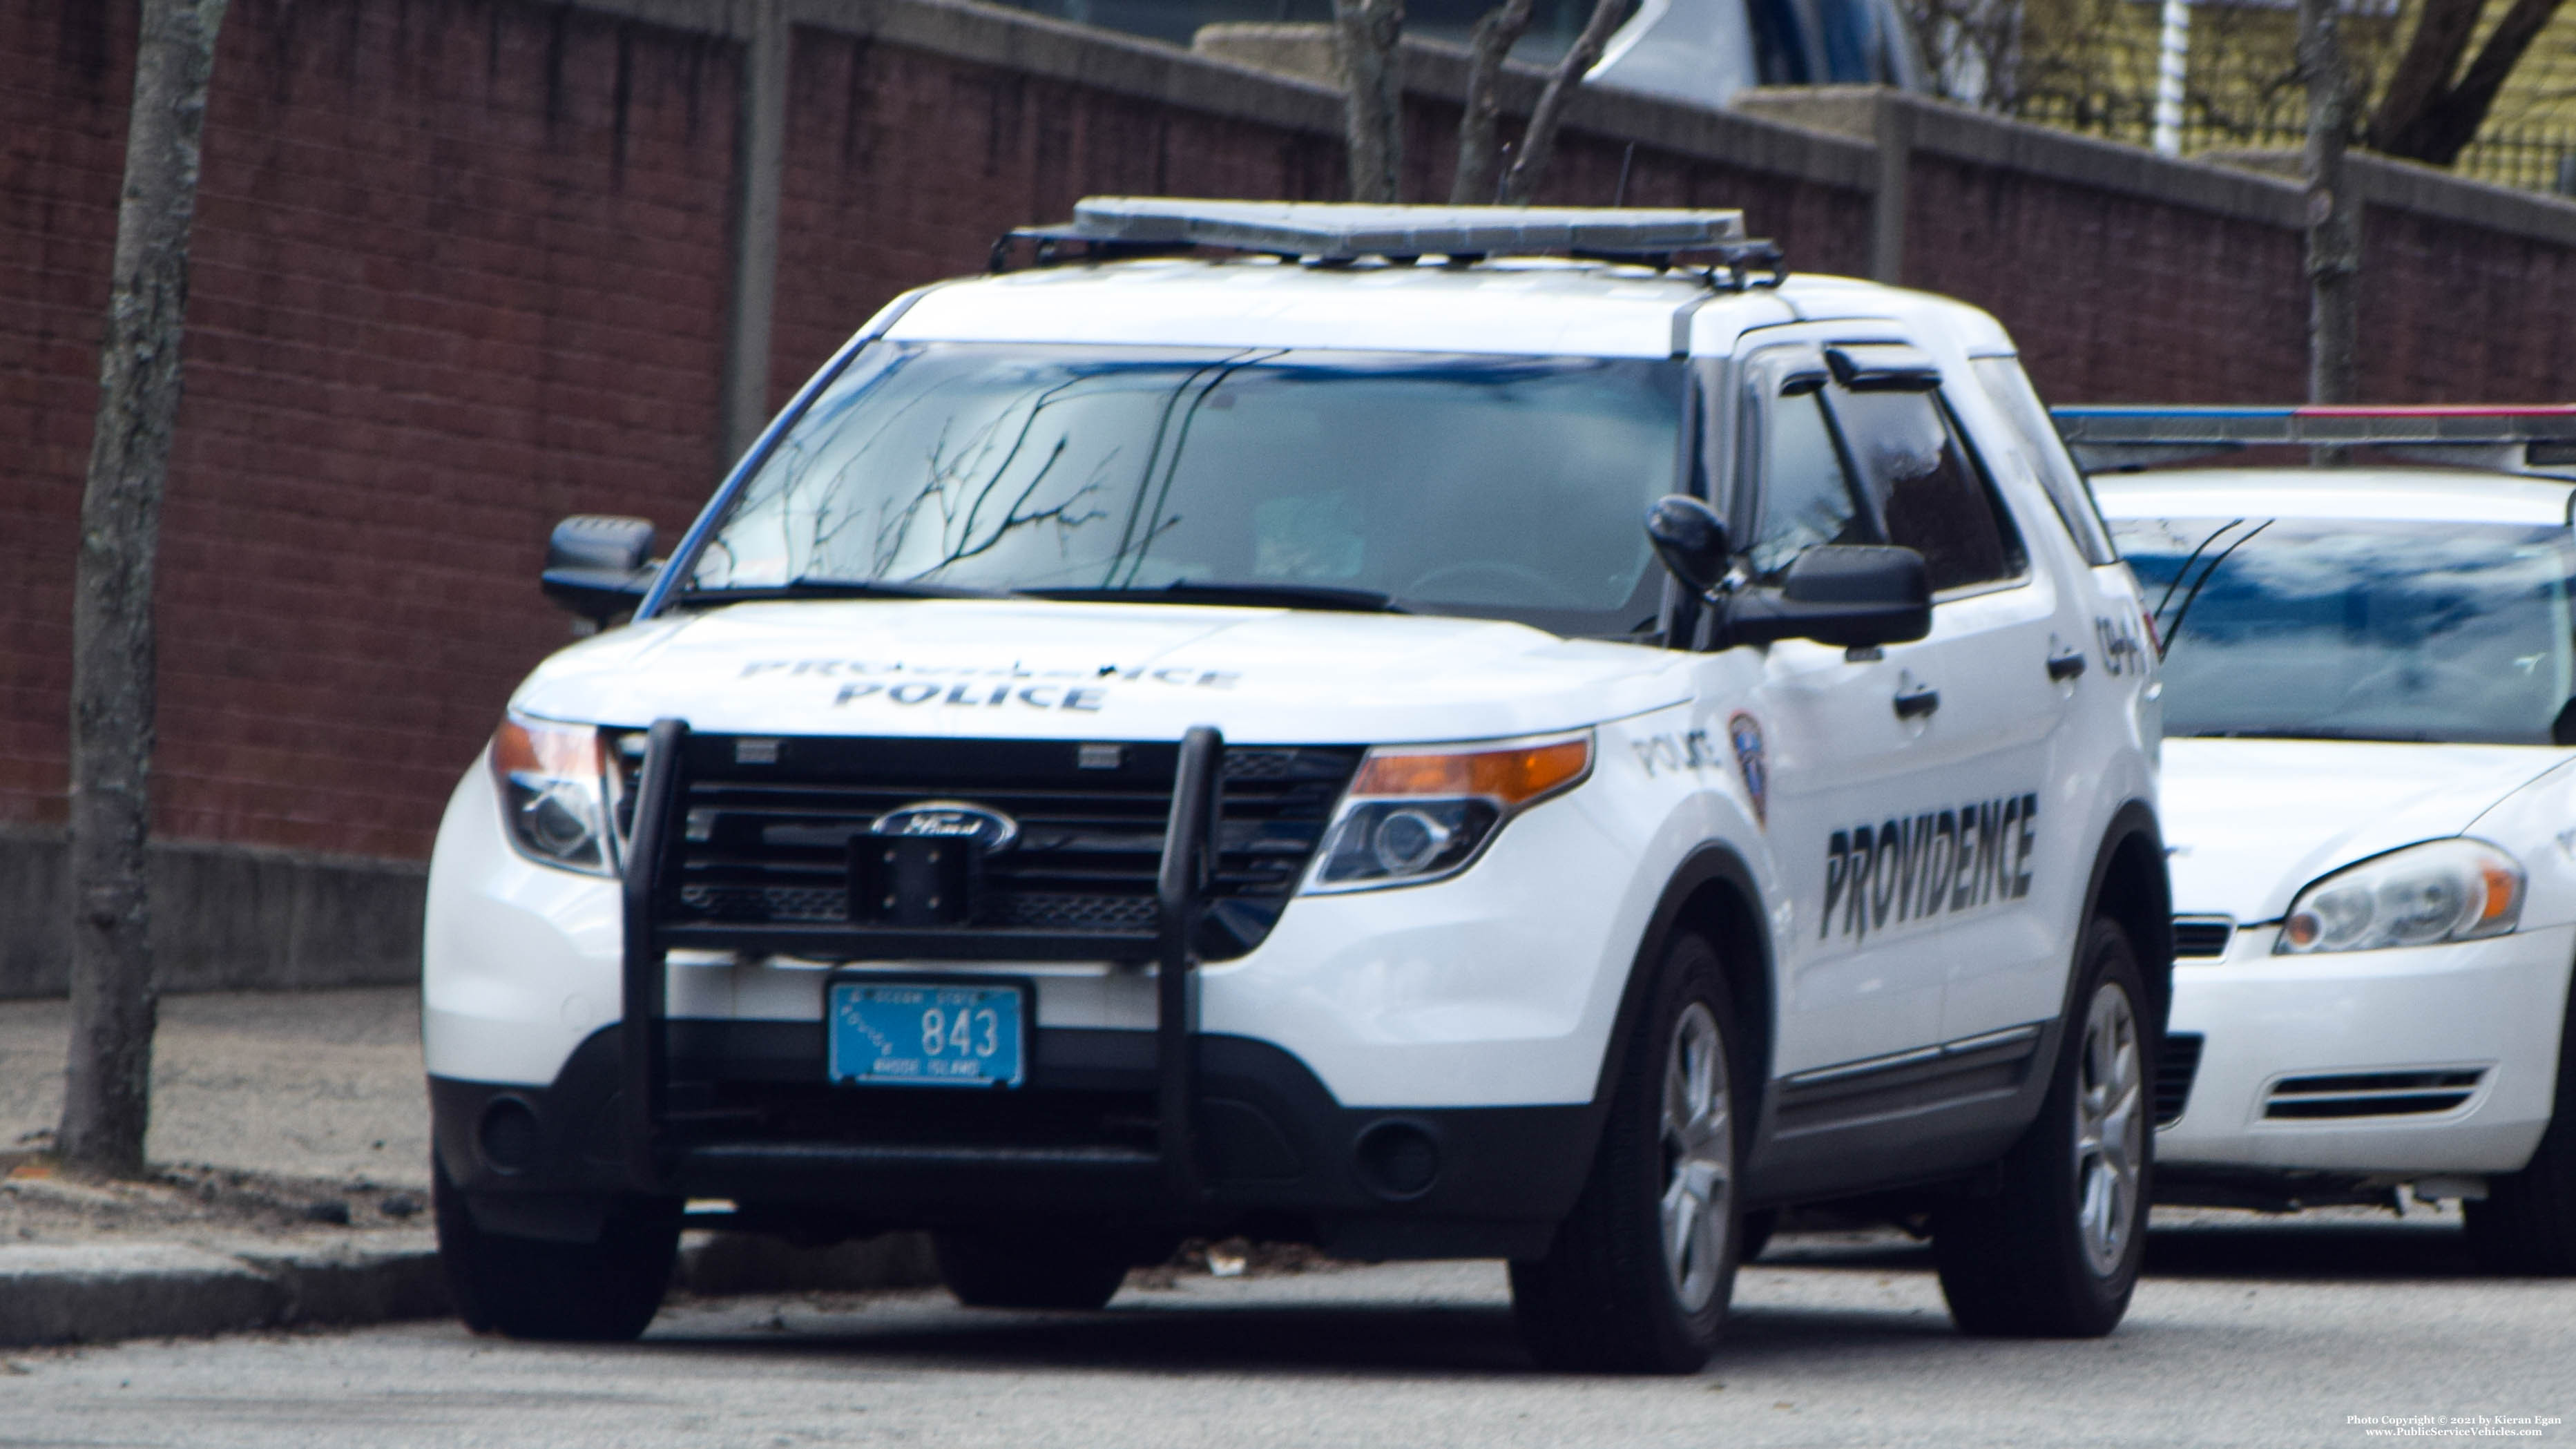 A photo  of Providence Police
            Cruiser 843, a 2015 Ford Police Interceptor Utility             taken by Kieran Egan